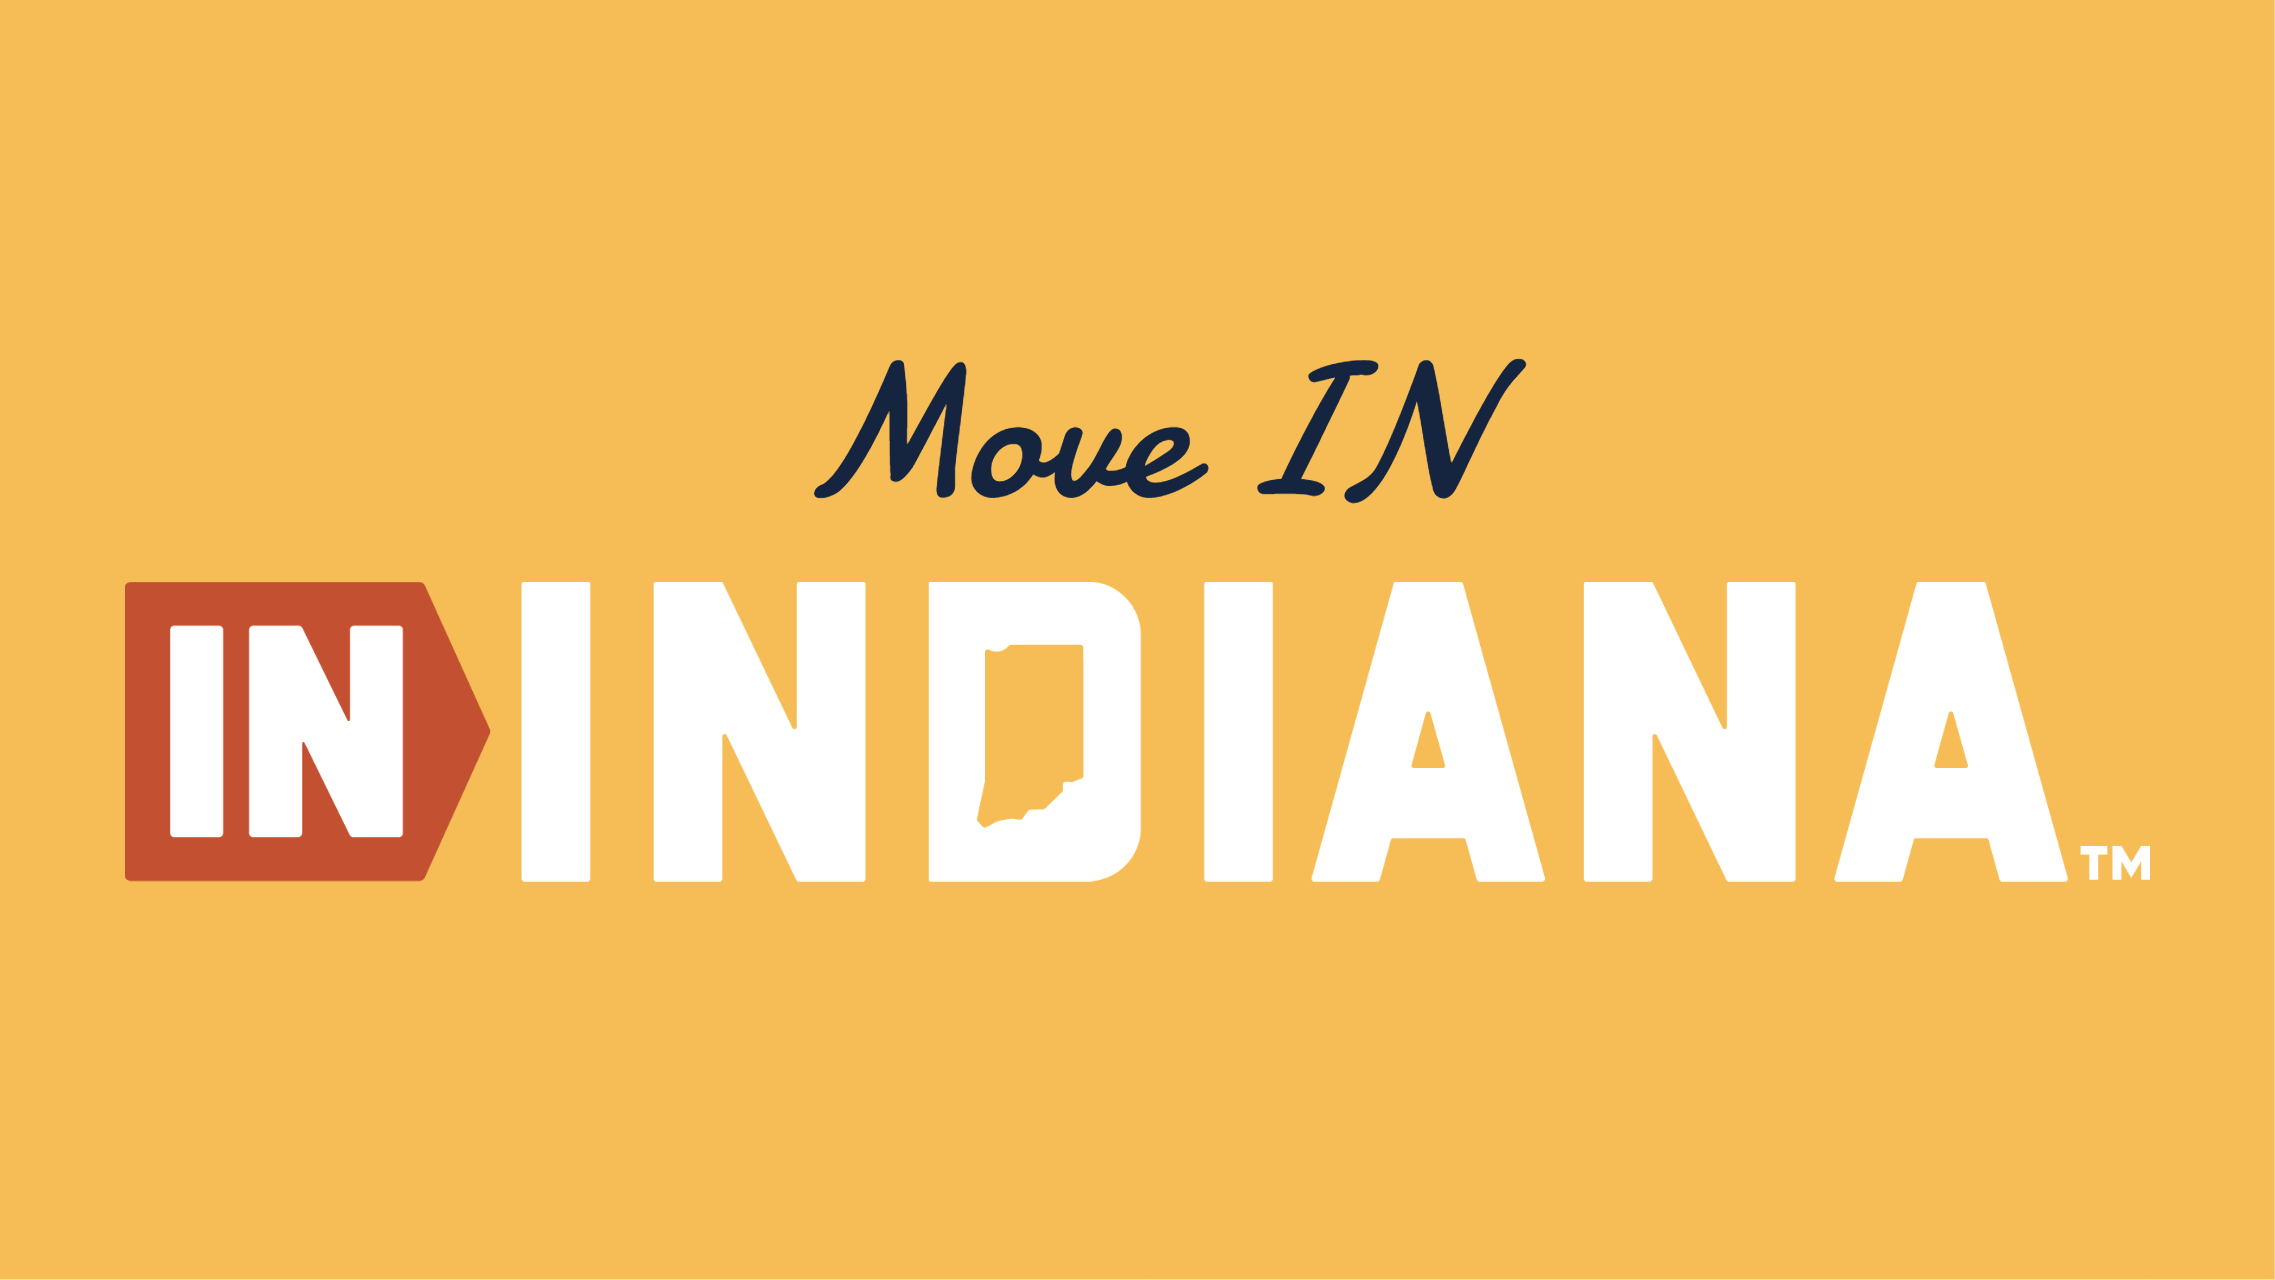 visitindiana.com/move-in